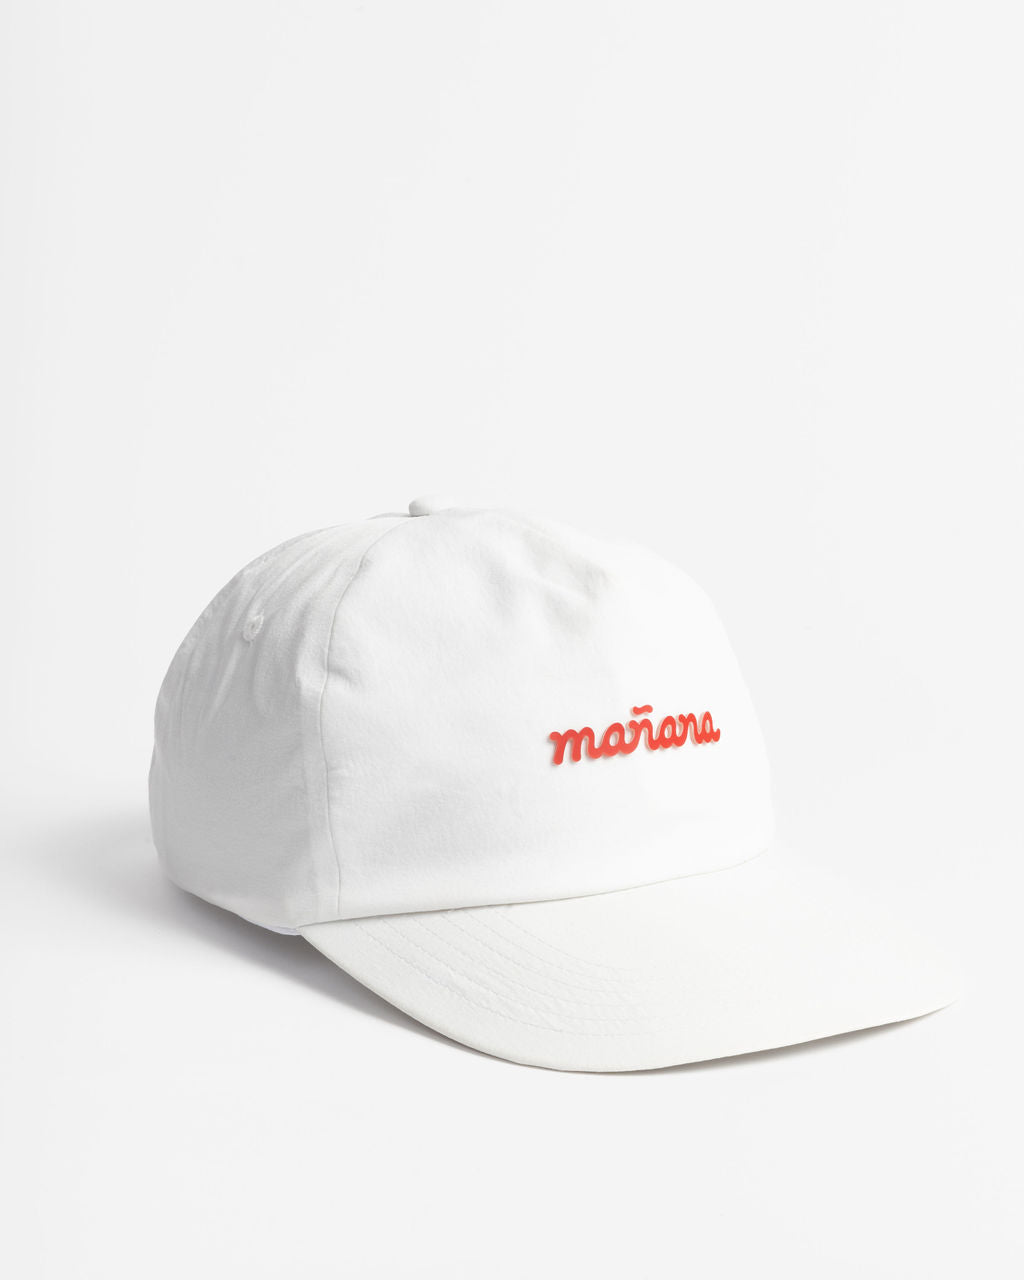 White Travel Hat with Manana branding